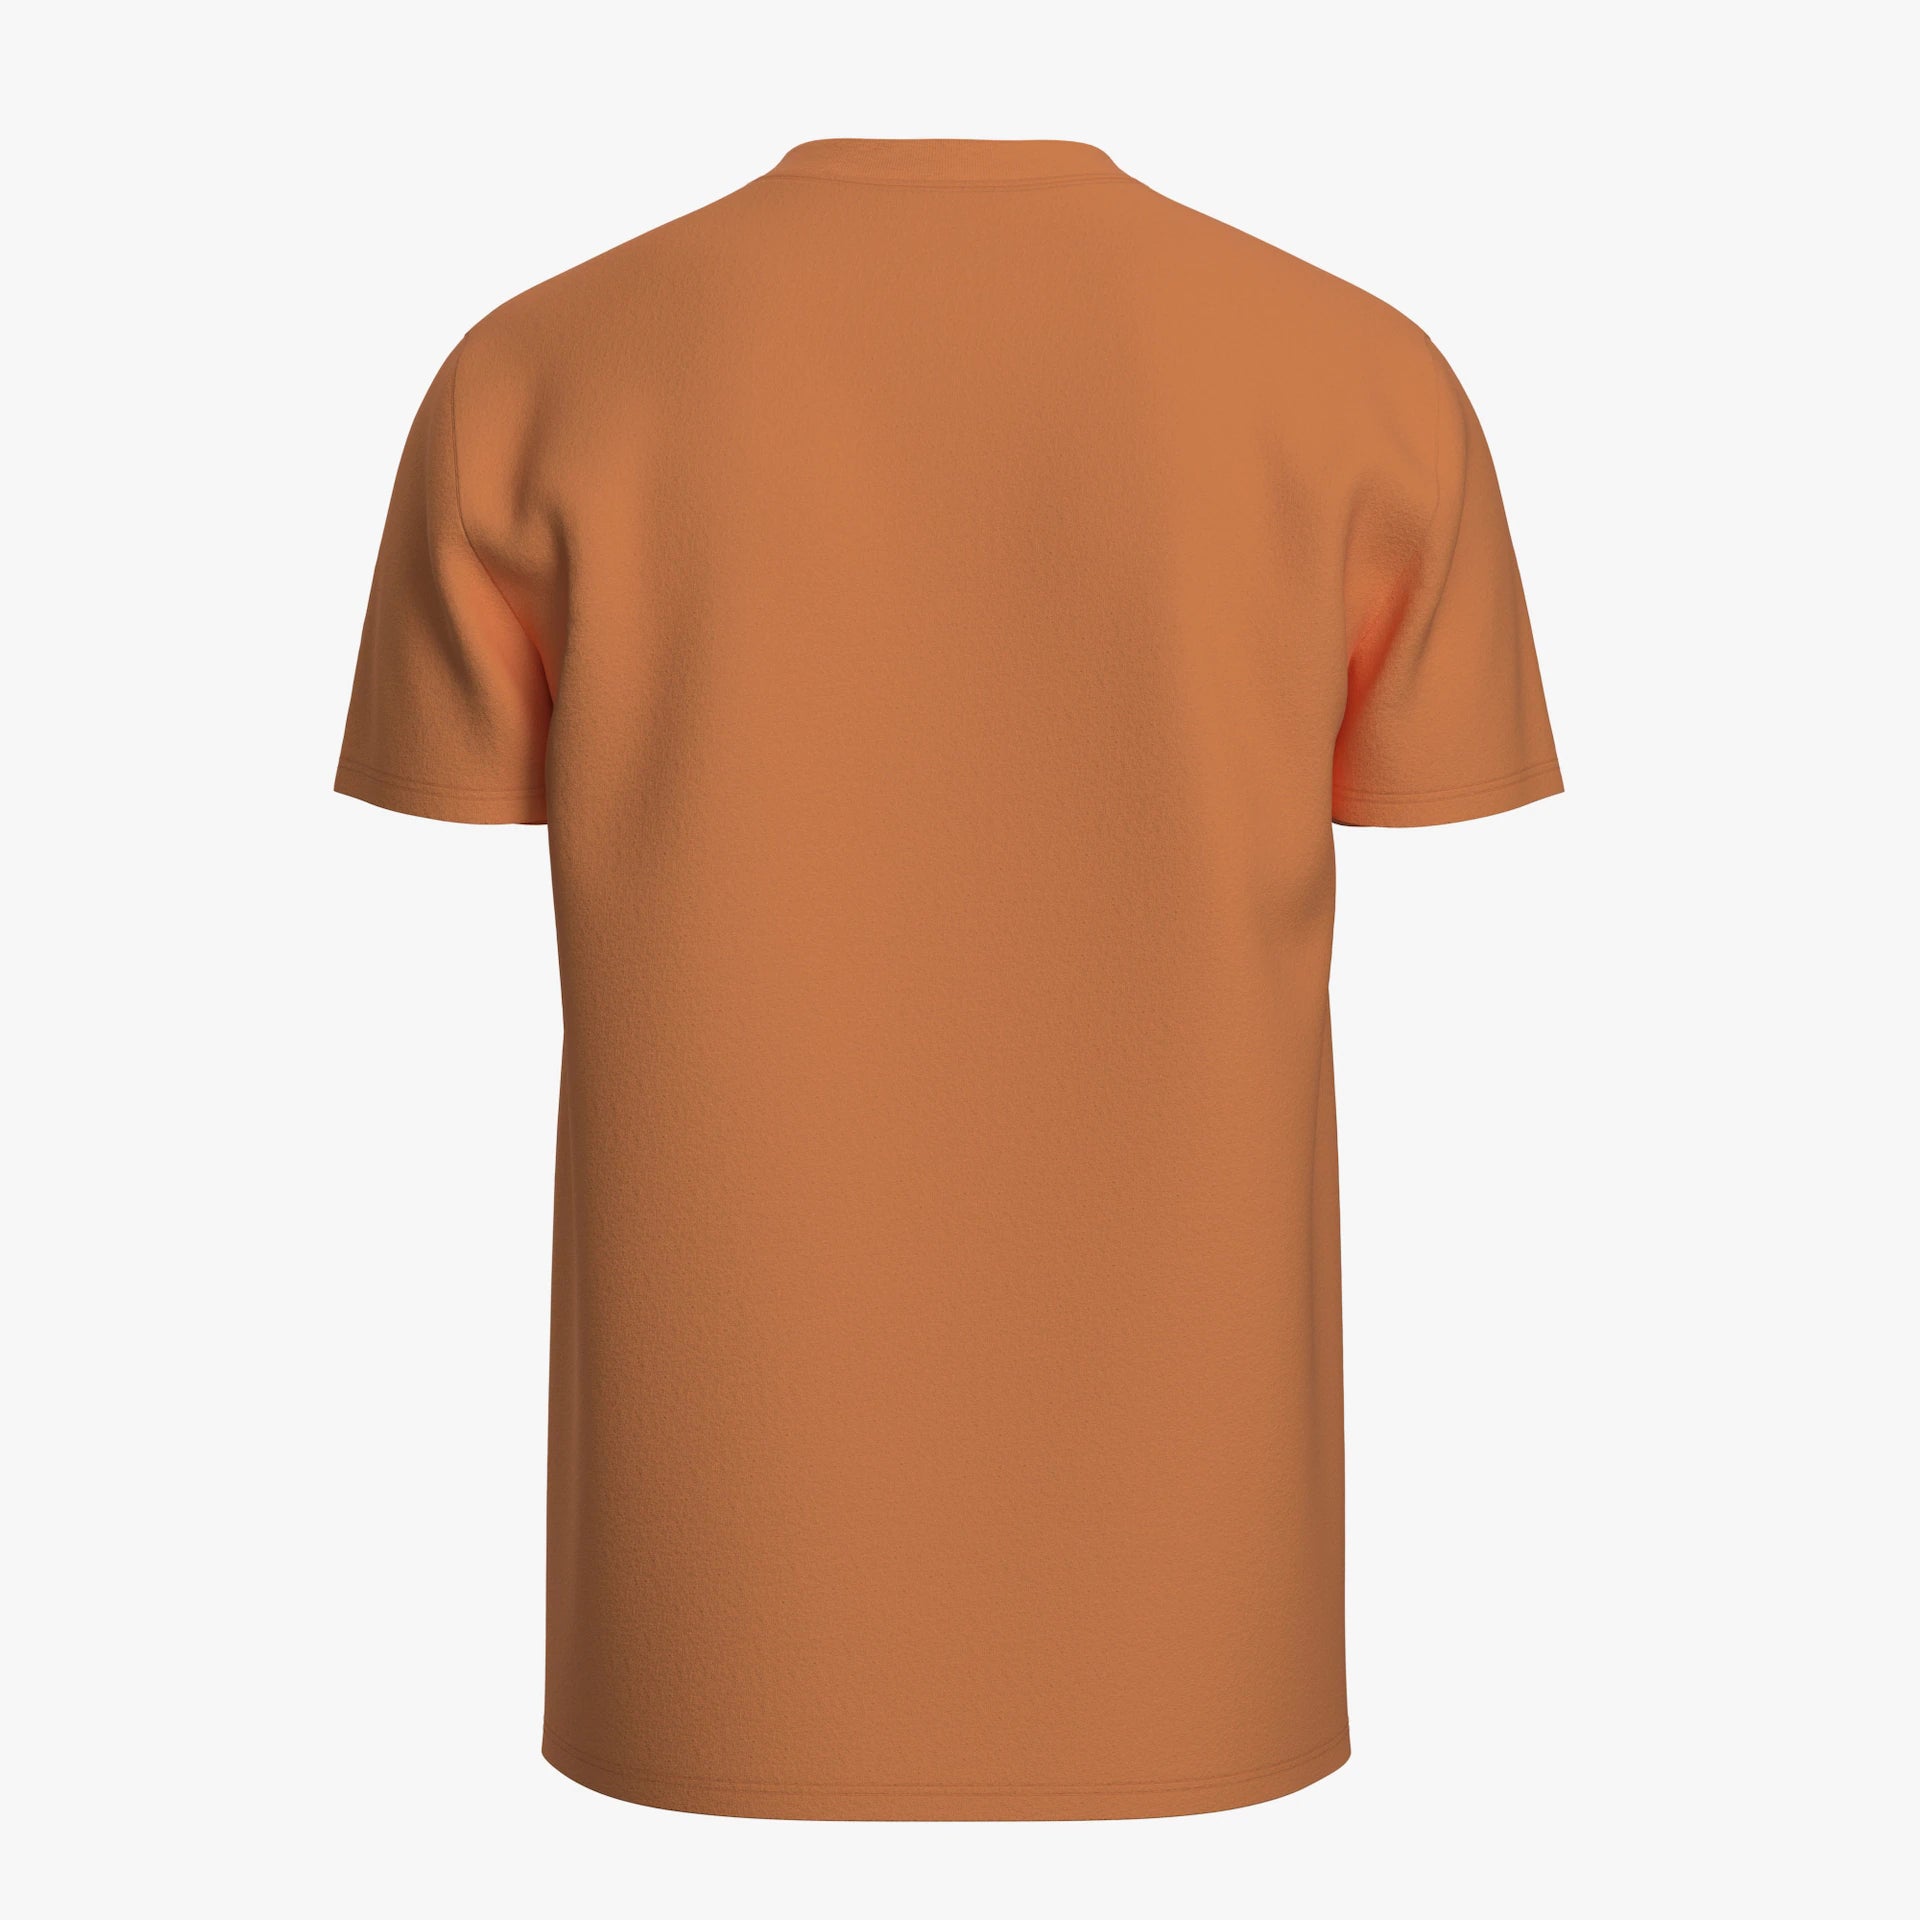 mandarin tree orange tee shirt